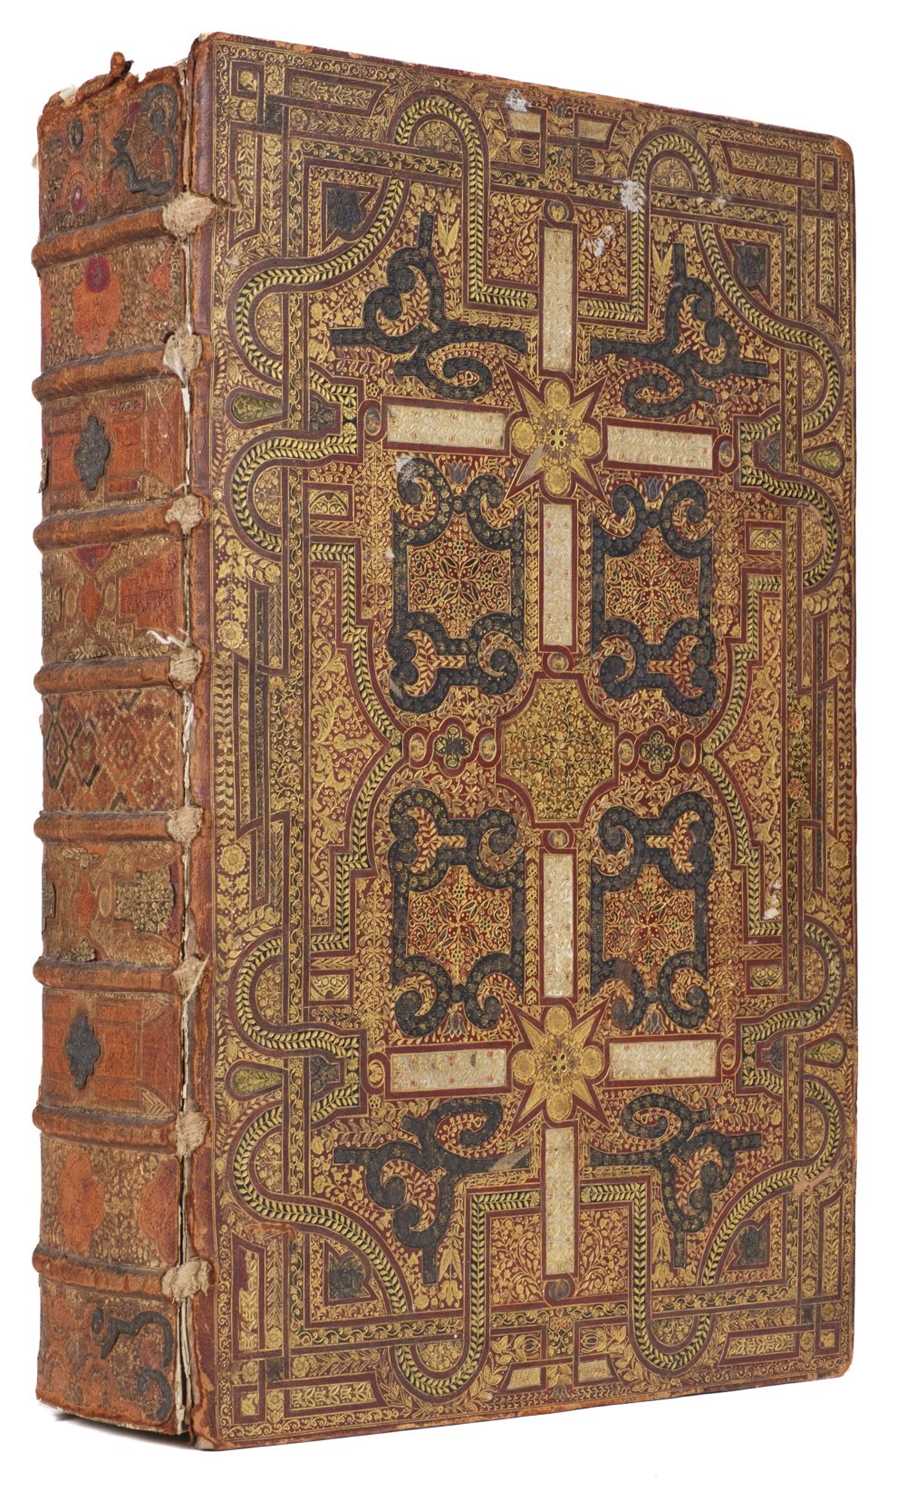 Lot 225 - Thomas Sedgley Binding. The Holy Bible, London, 1701, large folio